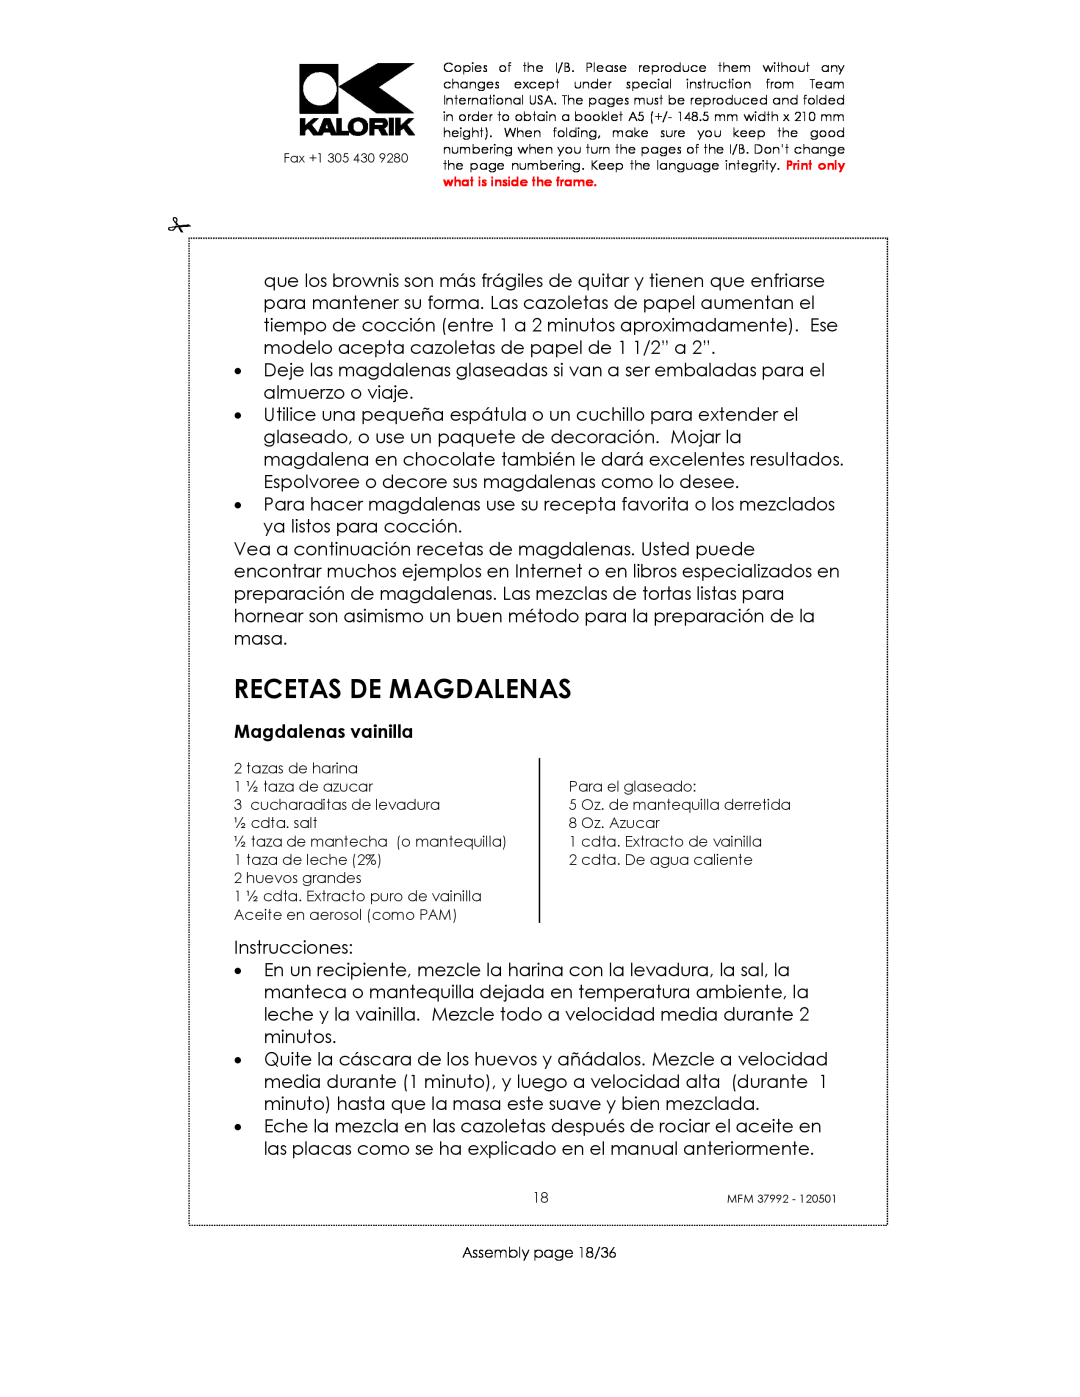 Kalorik MFM 37992 manual Recetas De Magdalenas, Magdalenas vainilla 